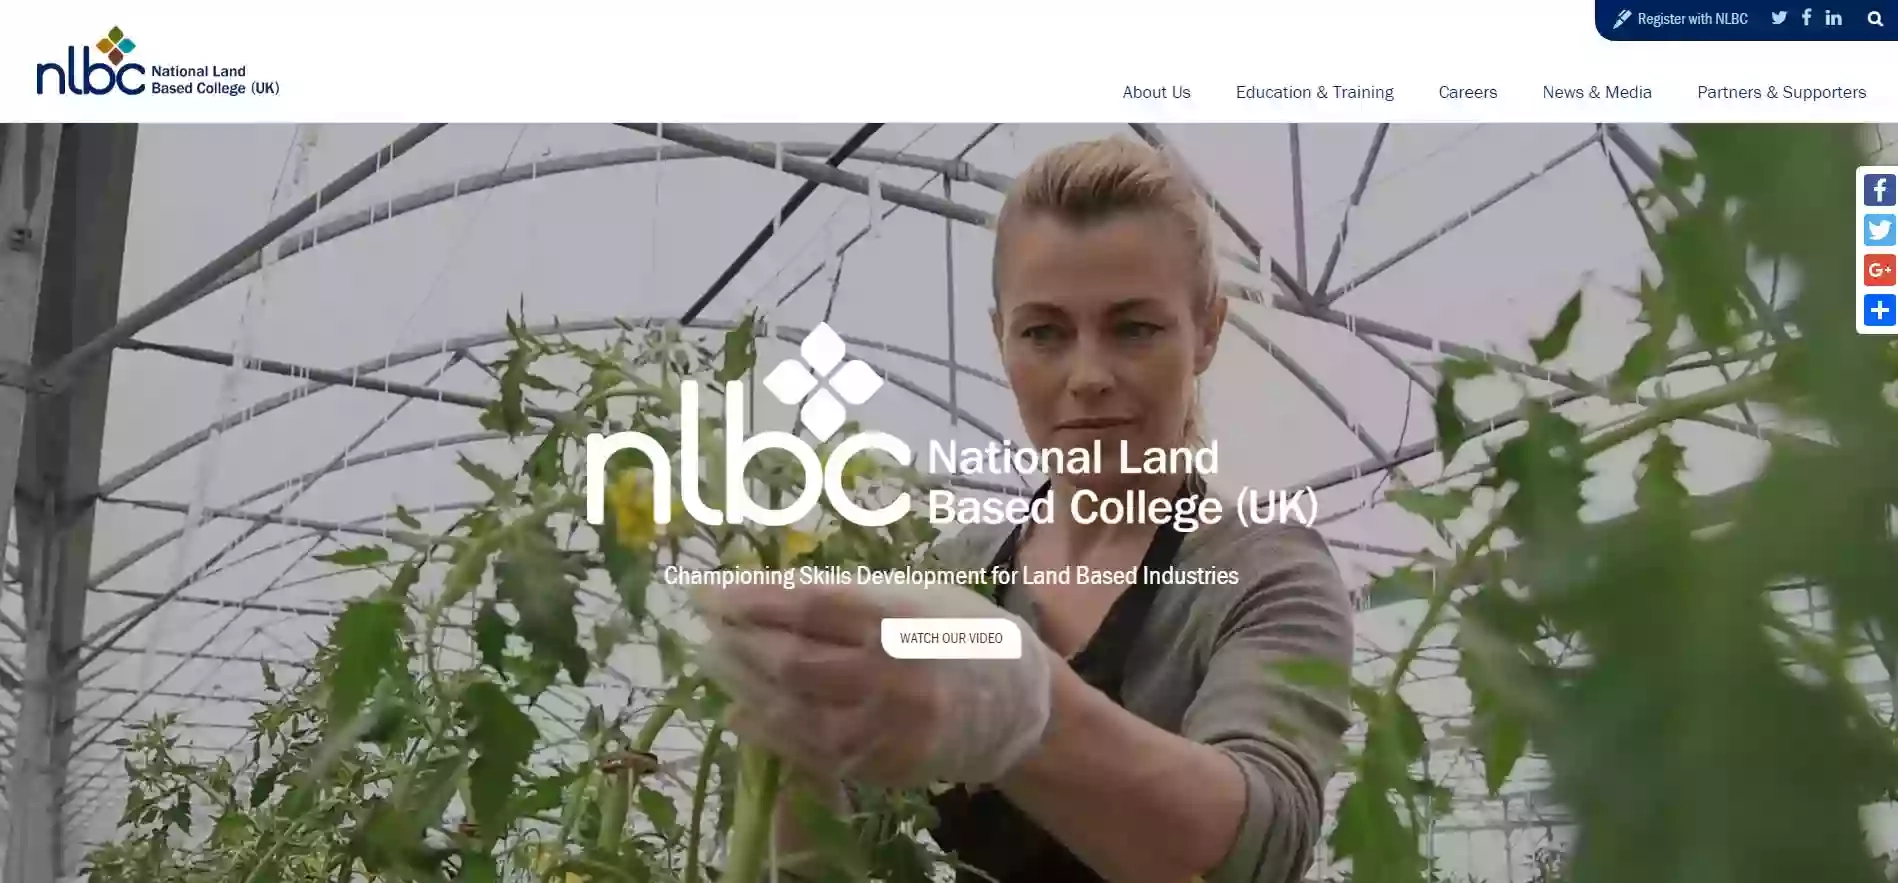 National Land Based College